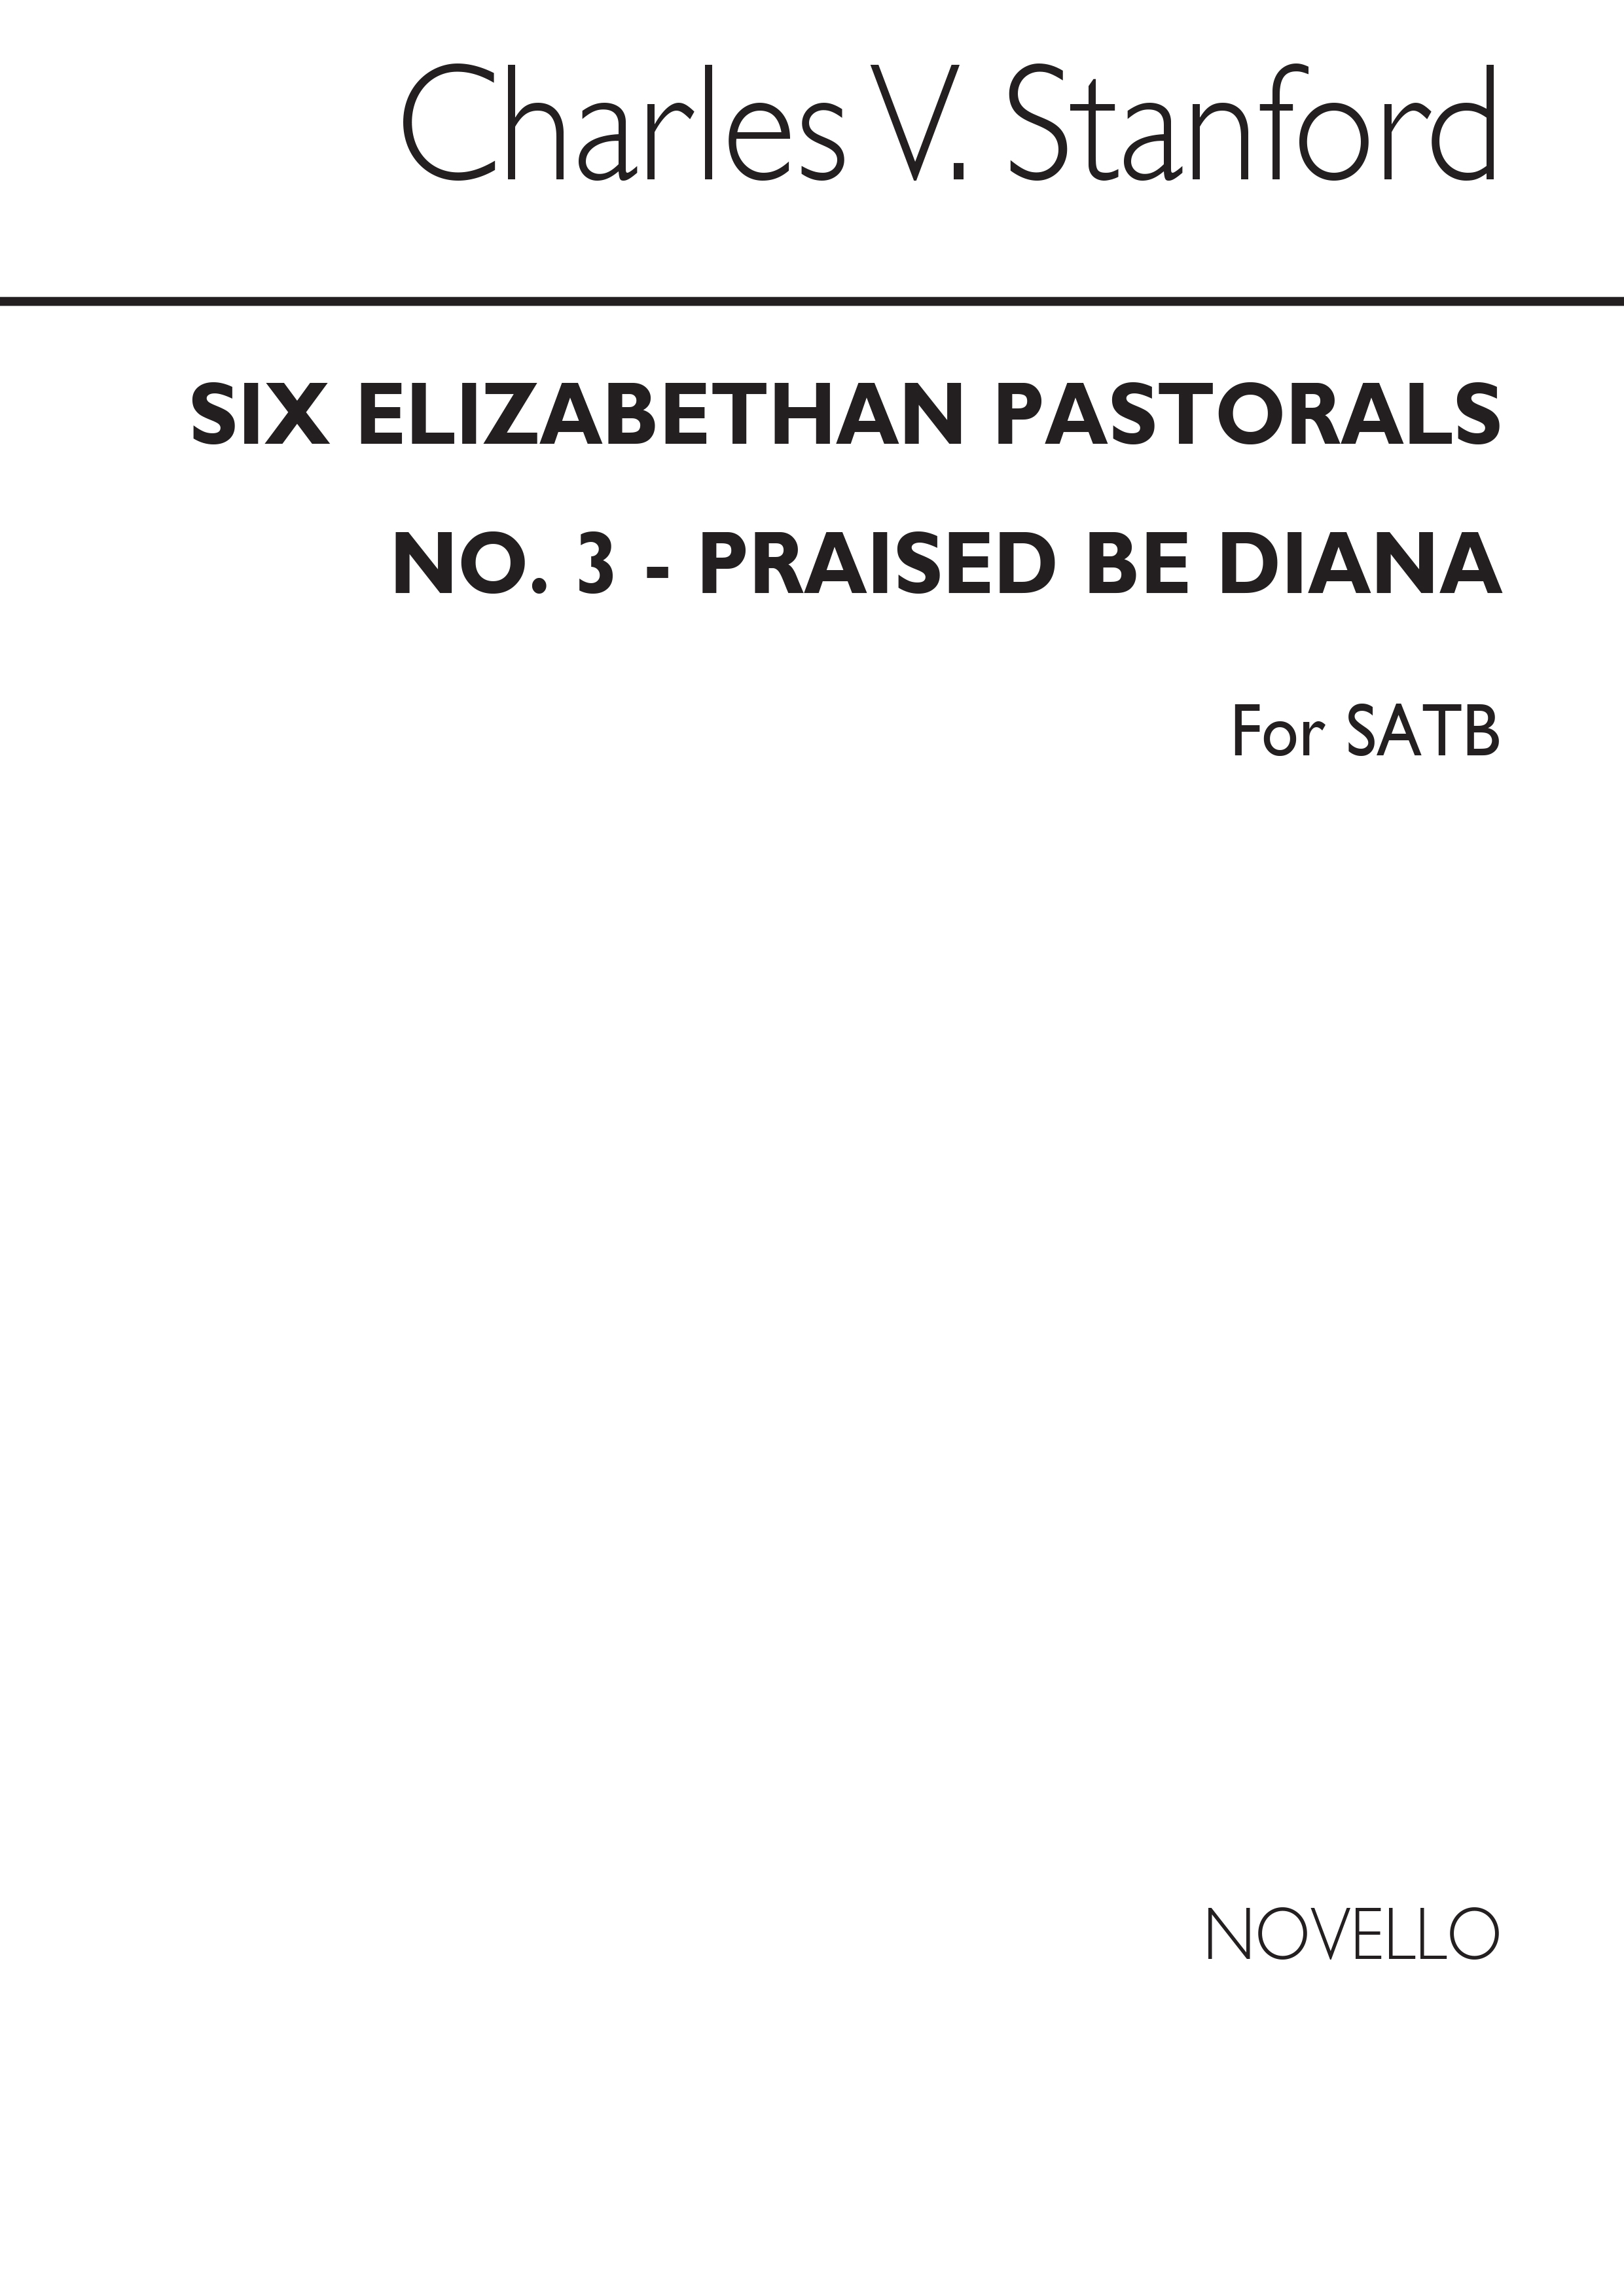 Charles Villiers Stanford: Praised Be Diana No3 Elizabethan Pastorals Set2: